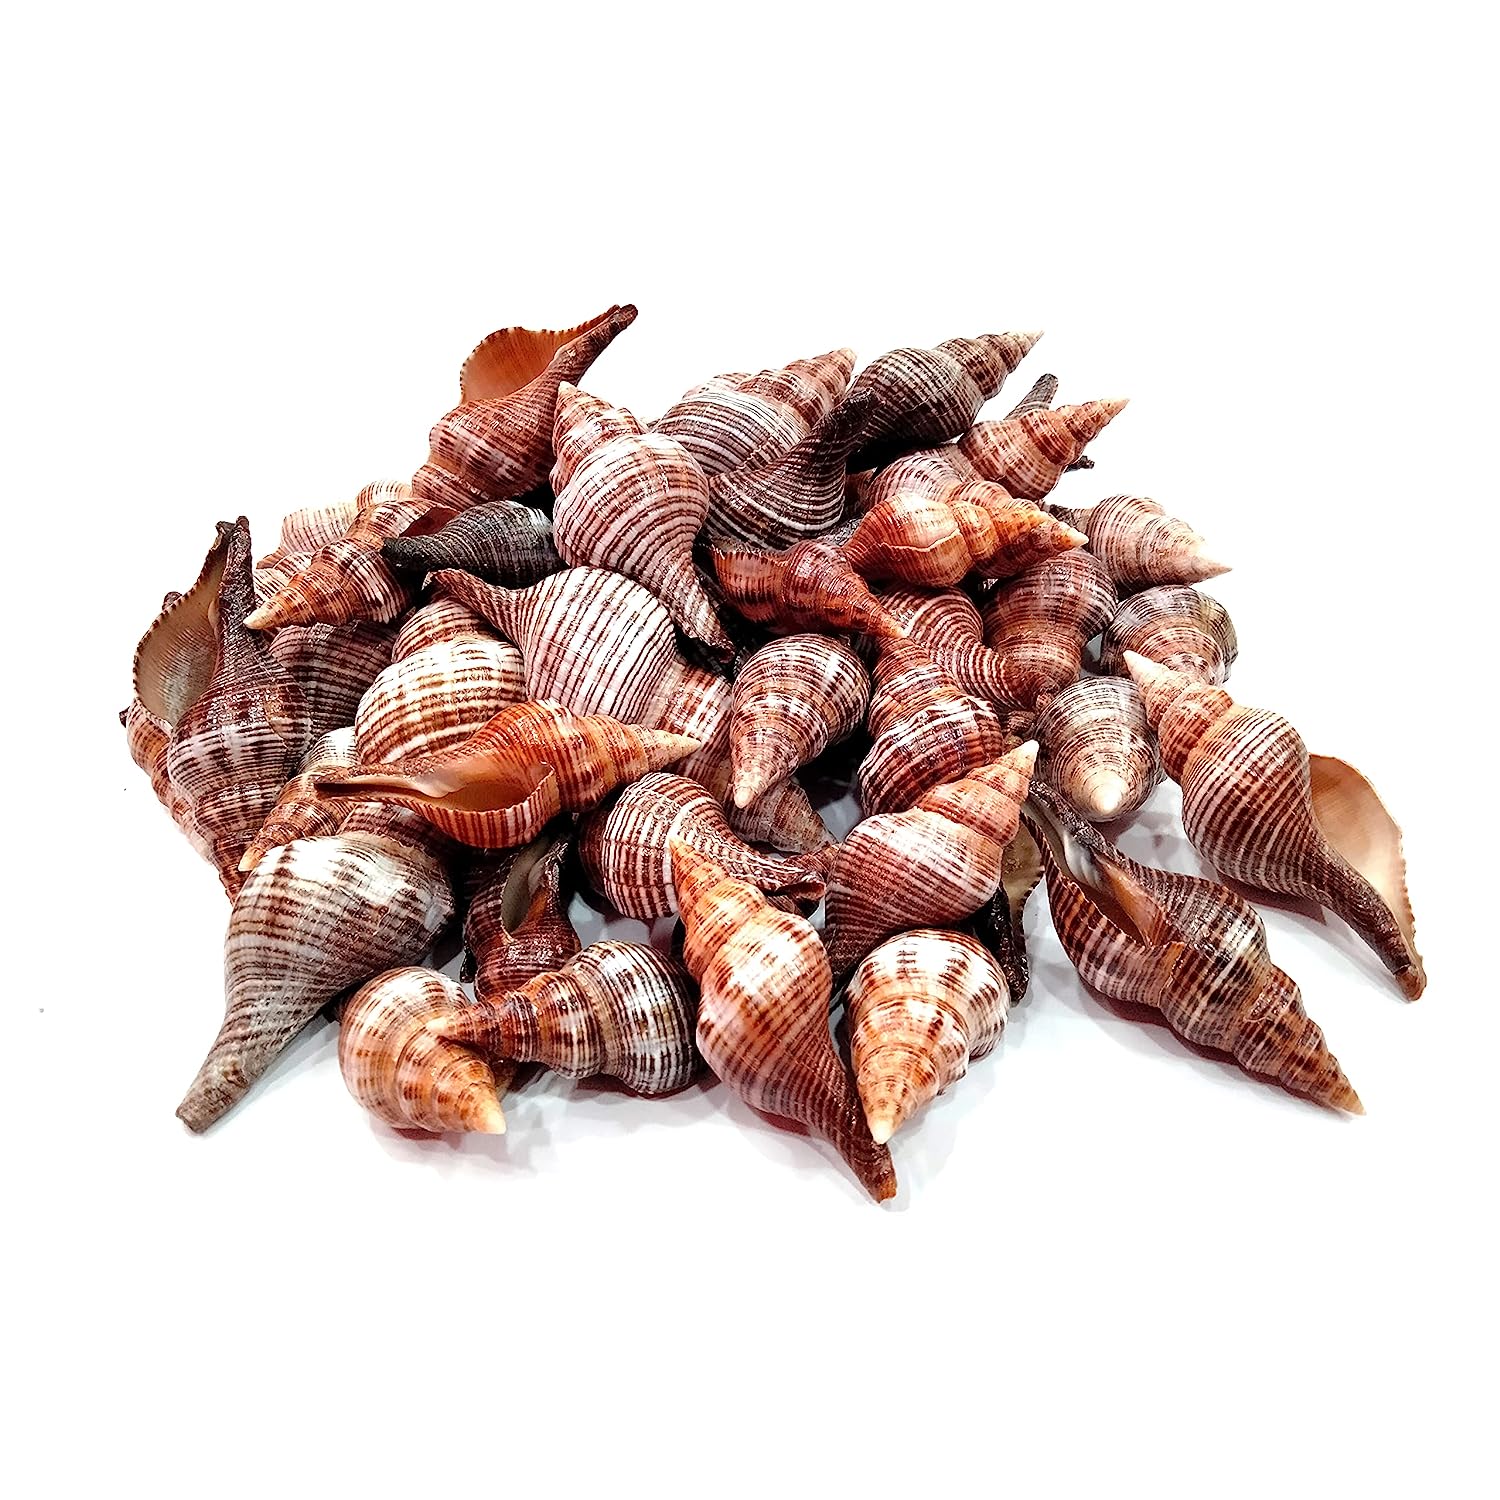 Seashell - Filamentous Horse Conch - Filifusus Filamentosus - Senseval Sangu - Ideal for Crafts Pack of 15 - 500gms